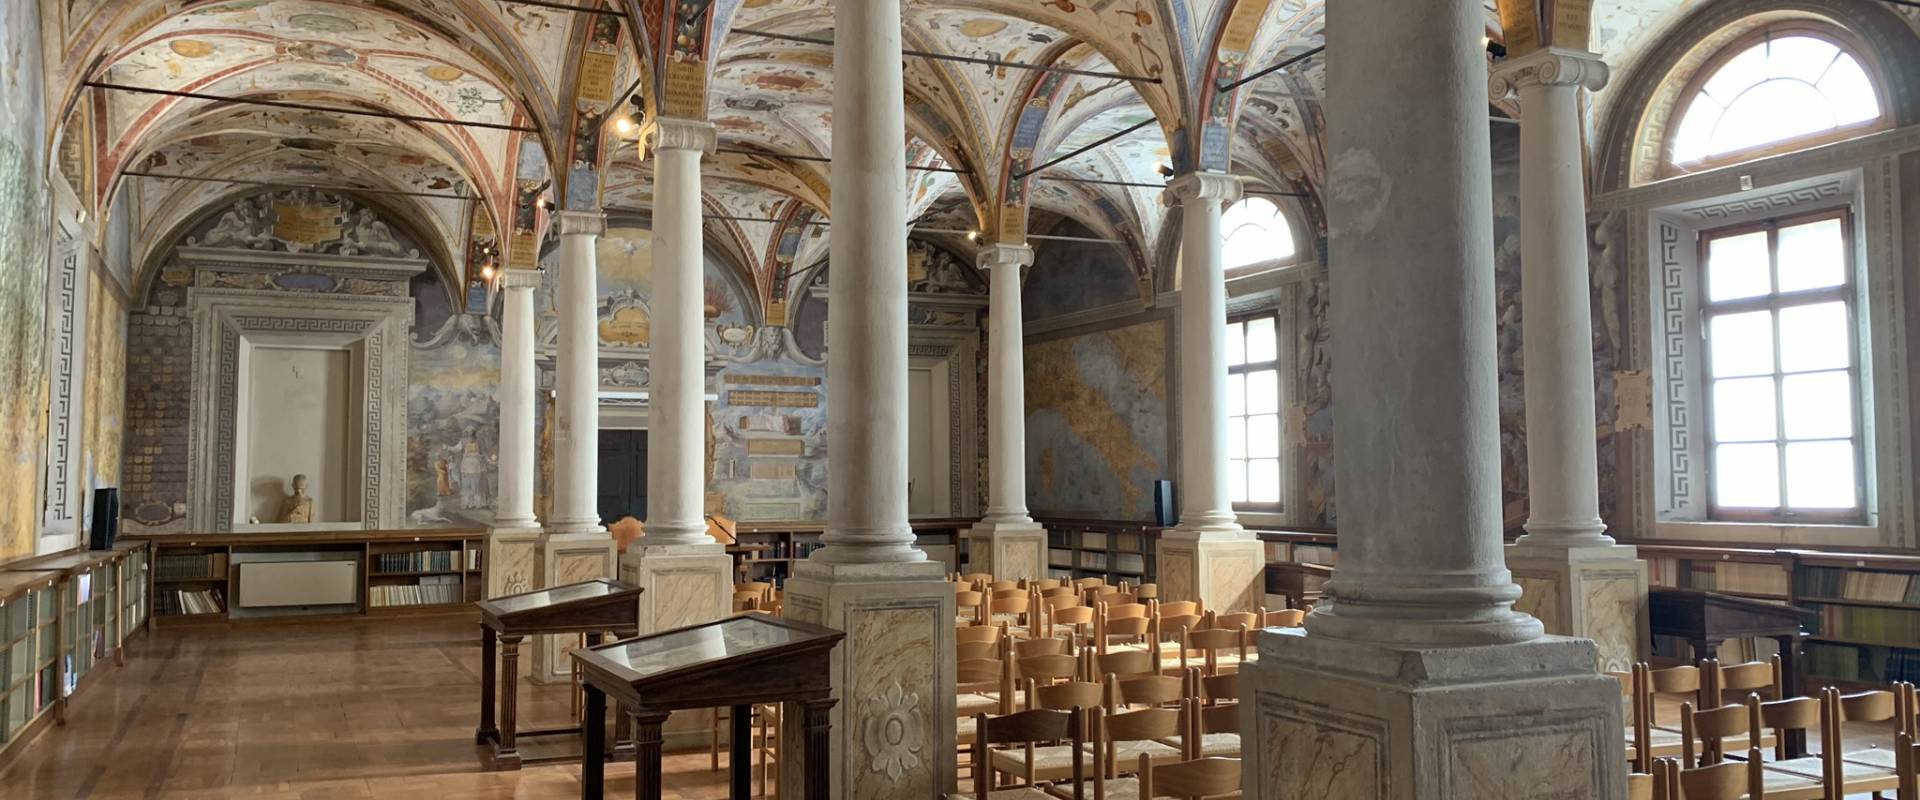 Biblioteca monastica foto di Martina Anelli